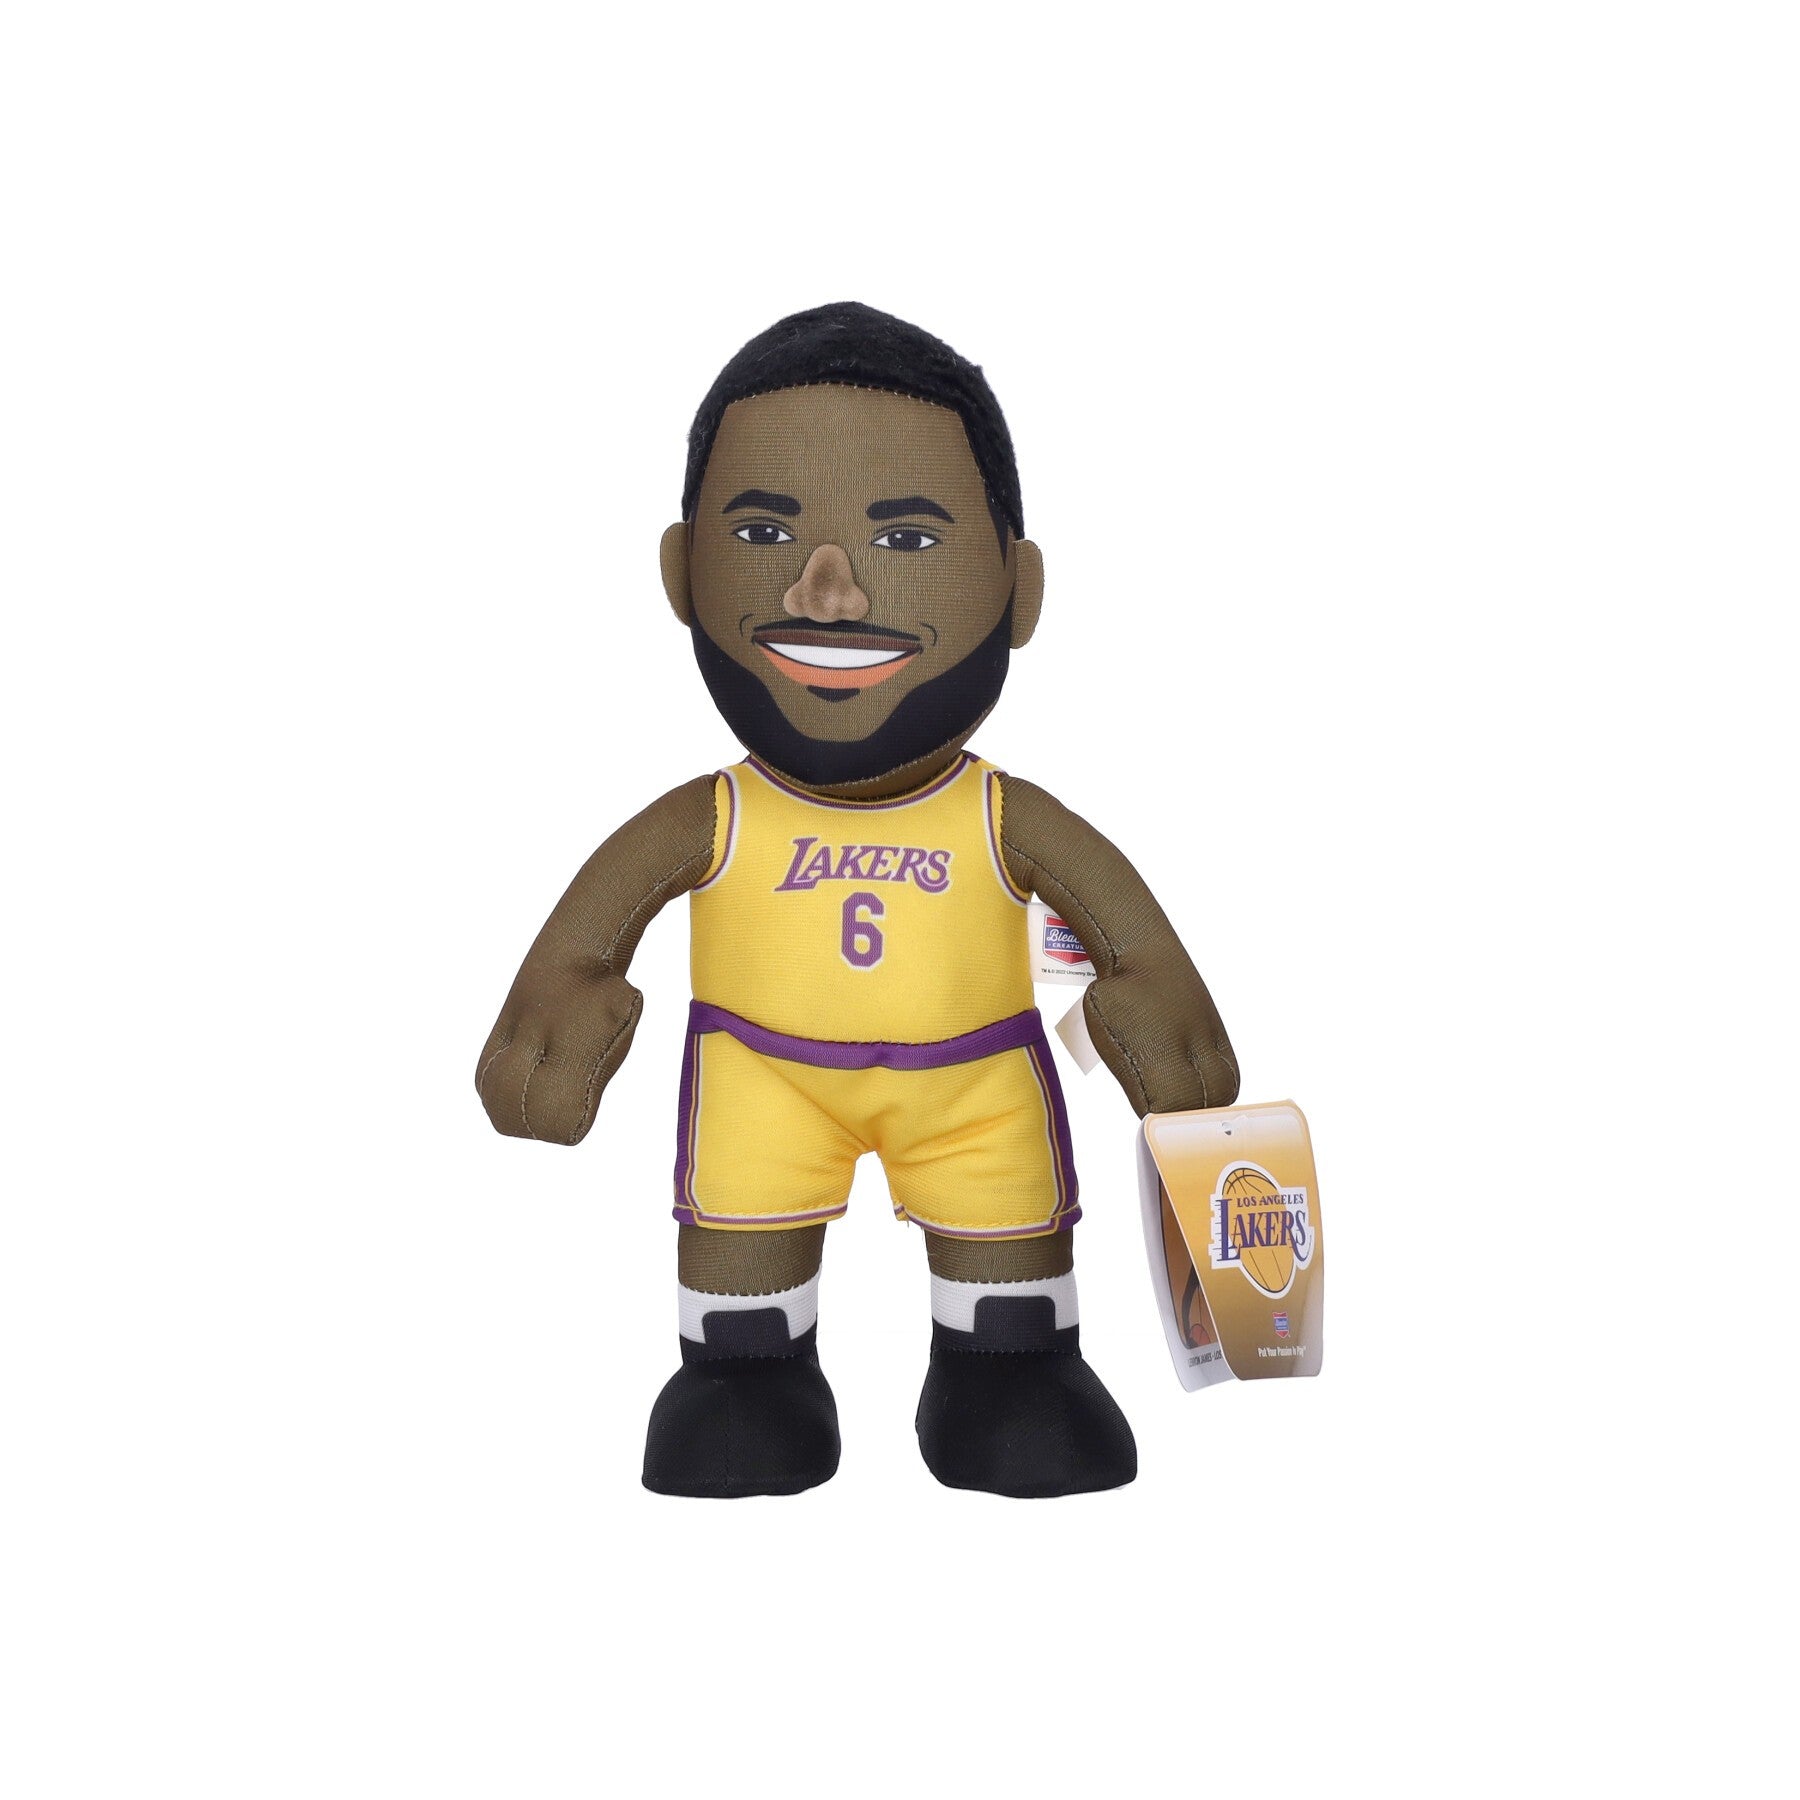 Men's NBA Plush No 6 Lebron James Loslak Original Team Colors Figurine